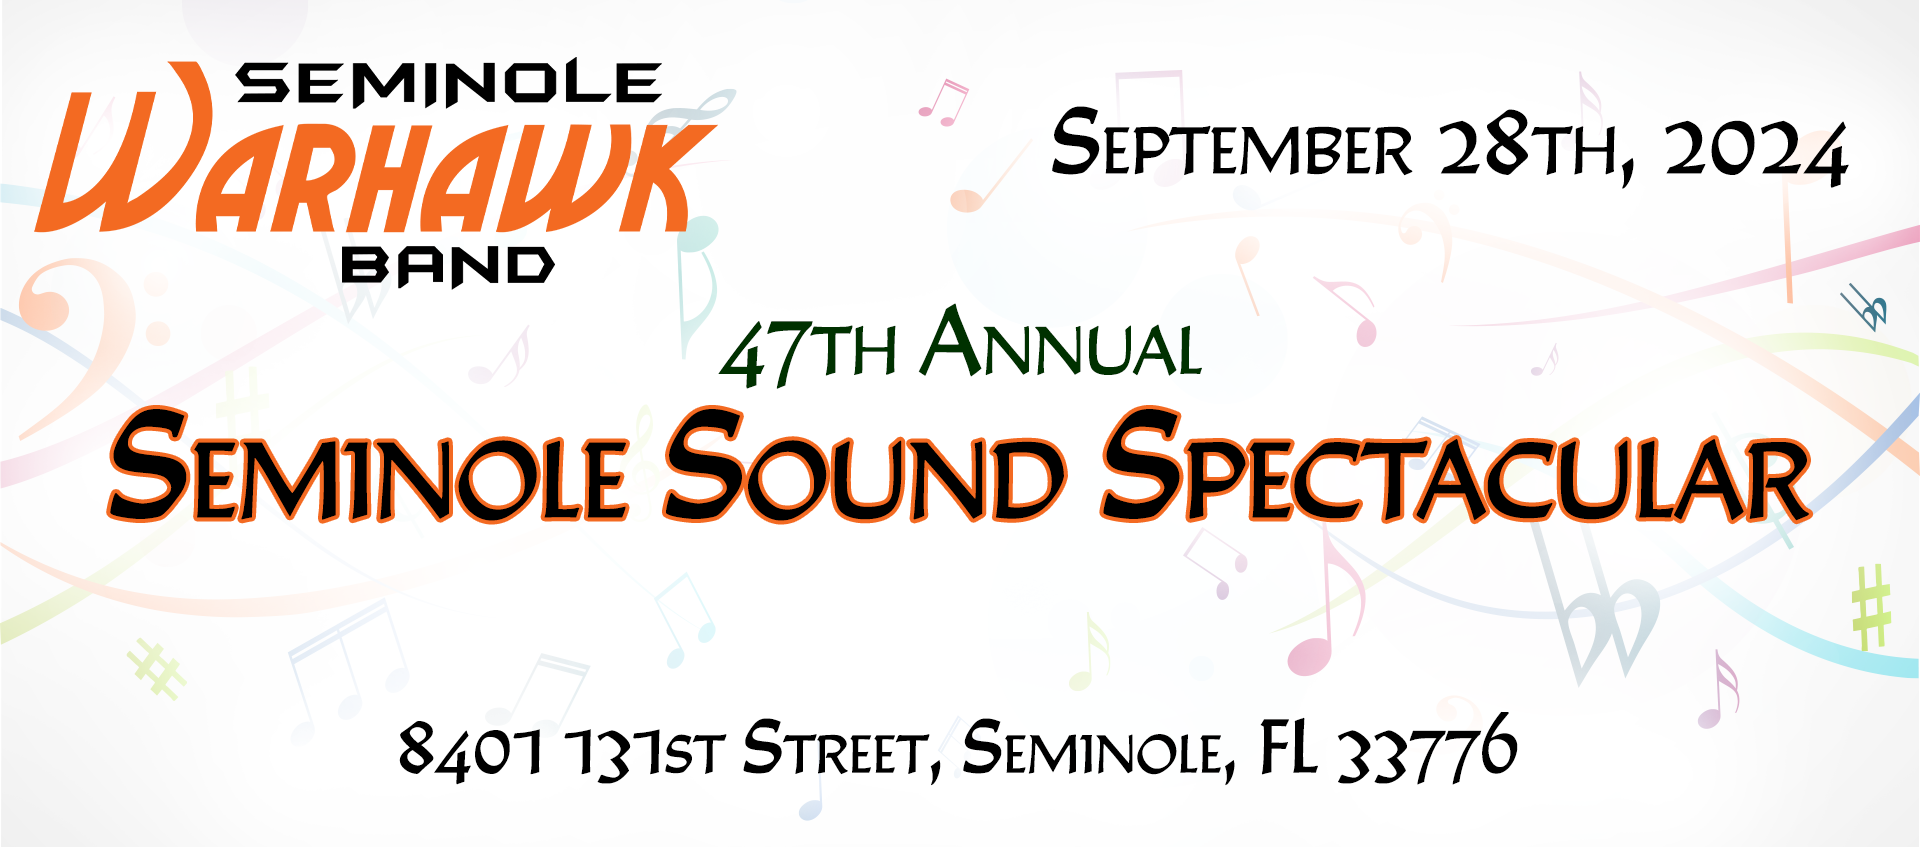 47th annual Seminole Sound Spectacular - Seminole, FL - September 28th, 2024